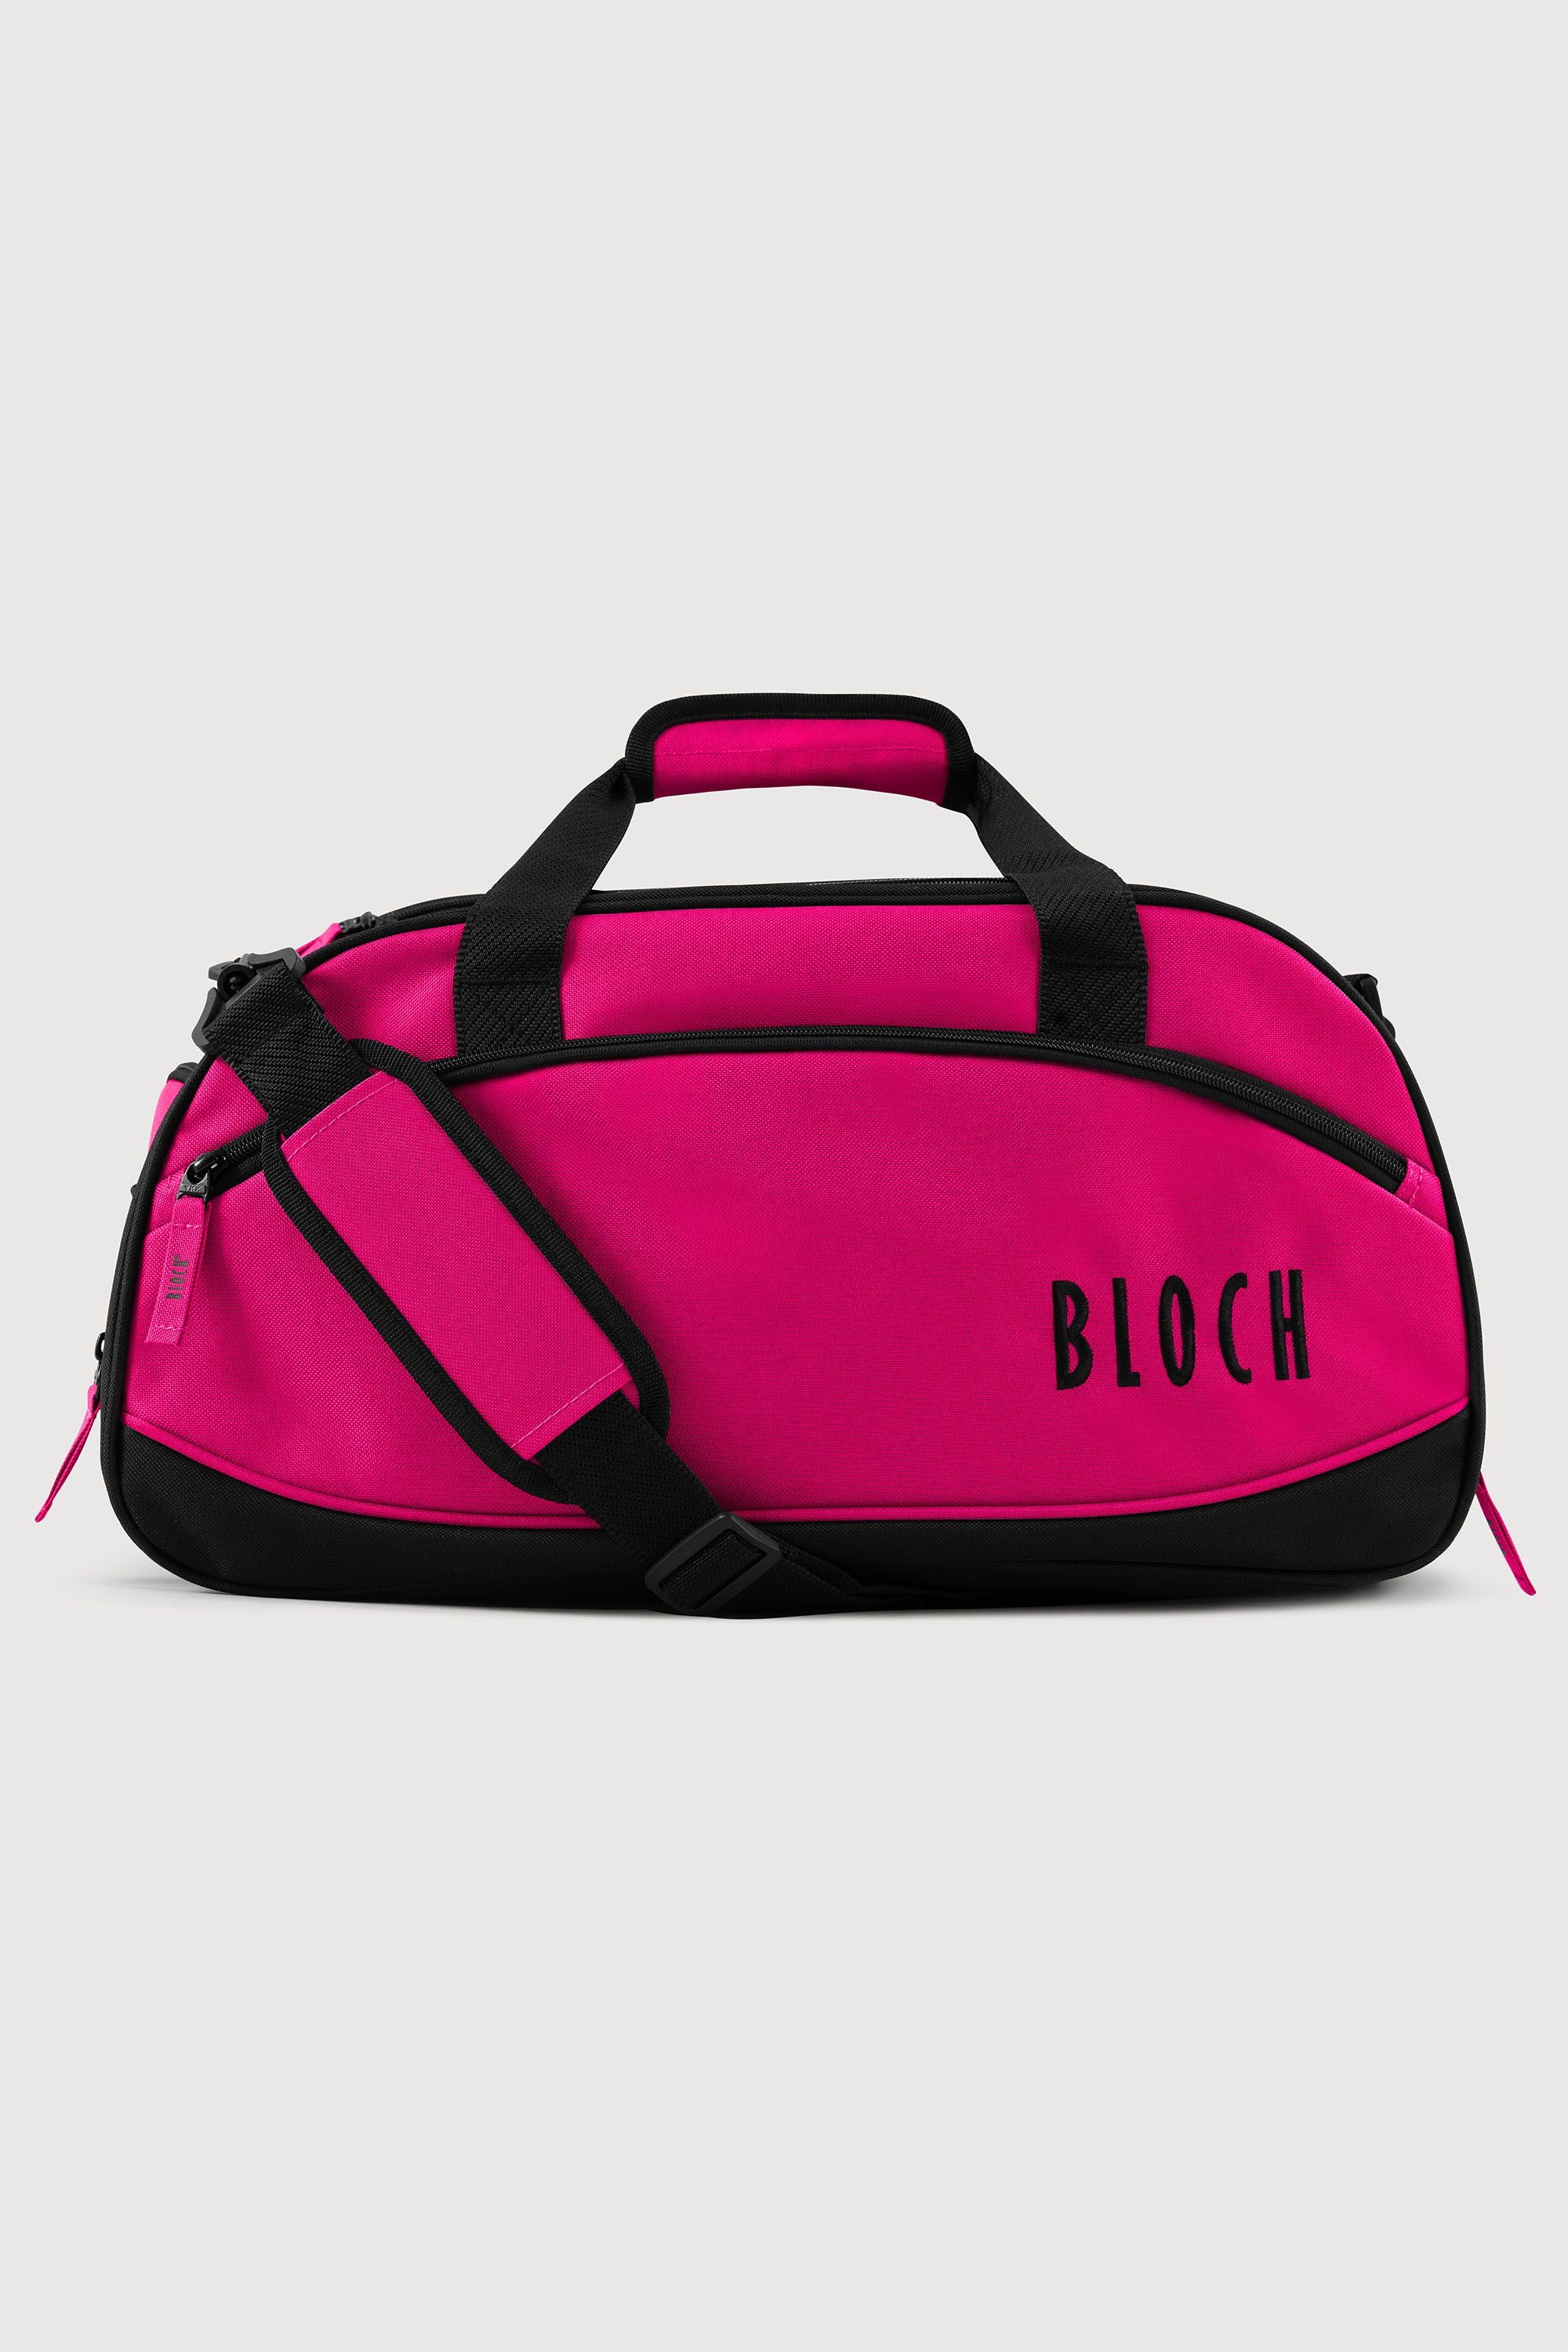 Bloch Two Tone Dance Bag, Fuschia/Black Nylon